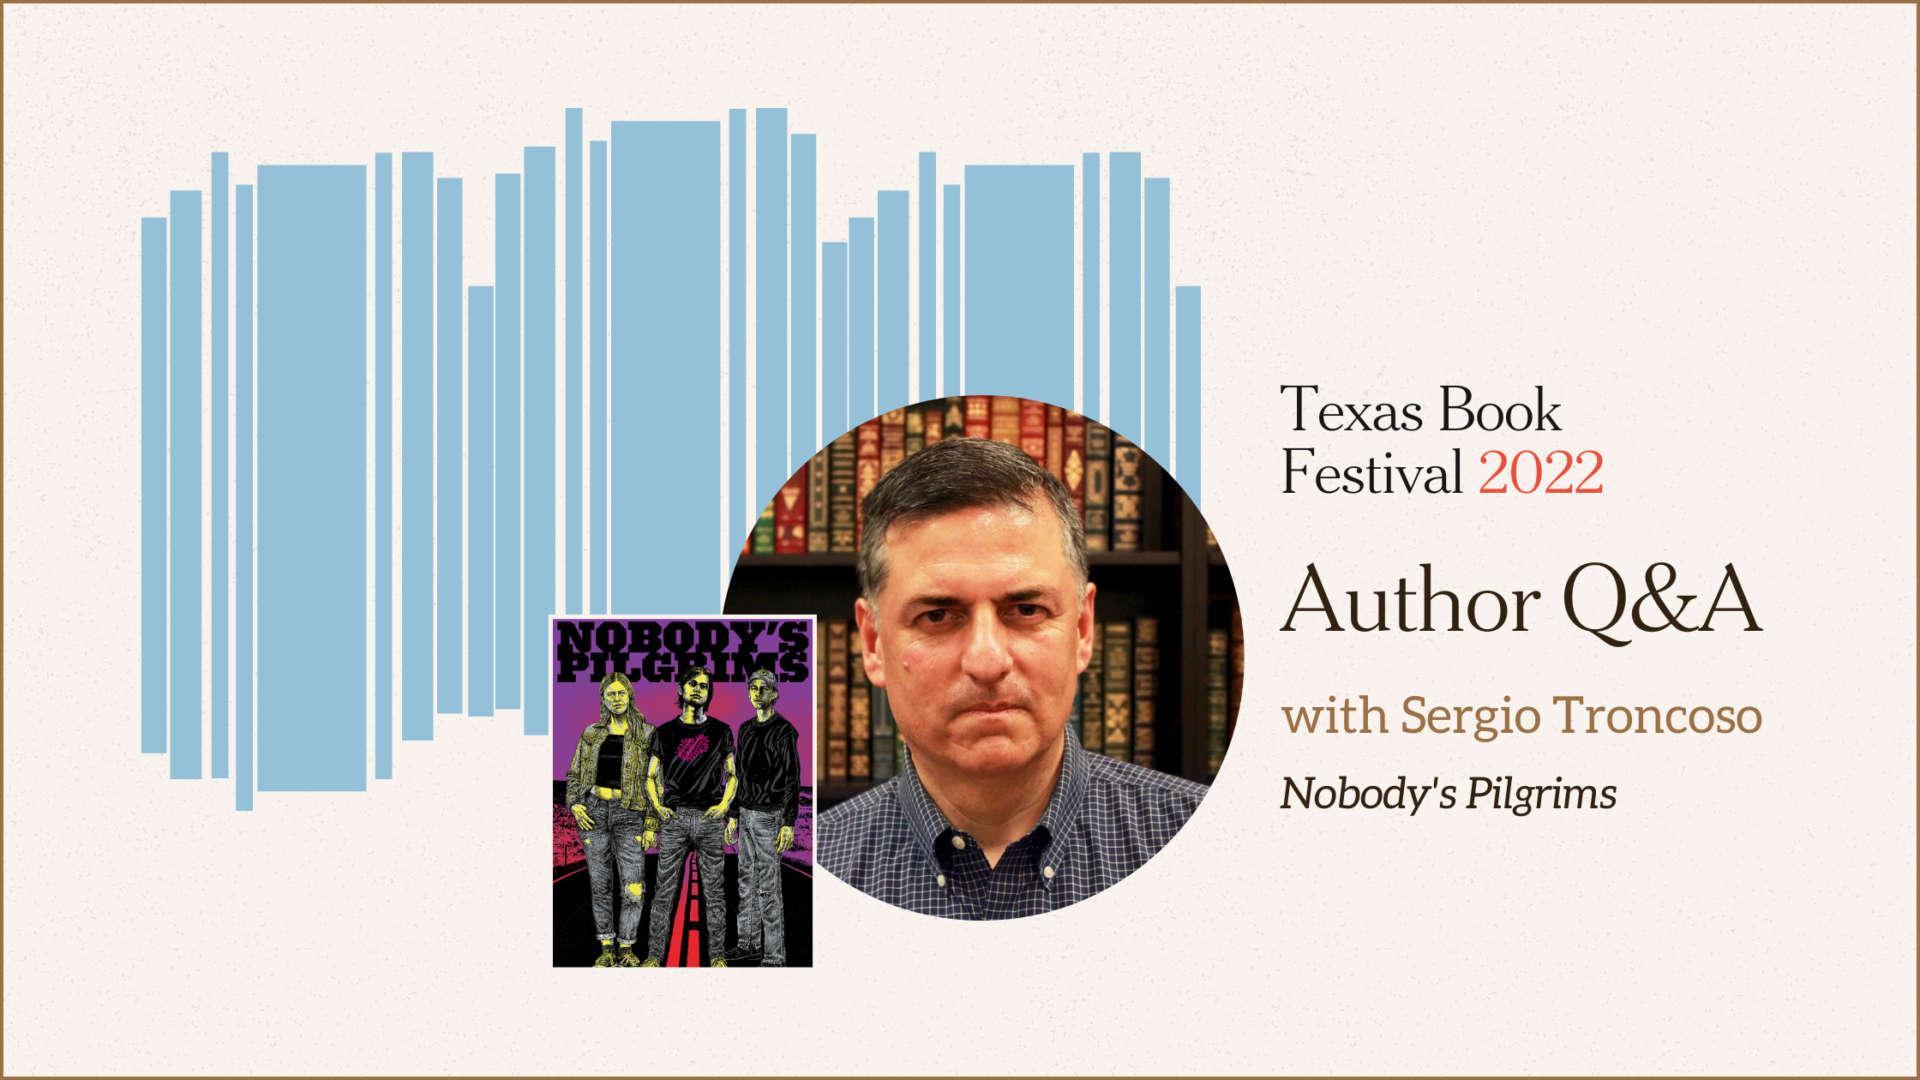 TBF Author Q&A with Sergio Troncoso